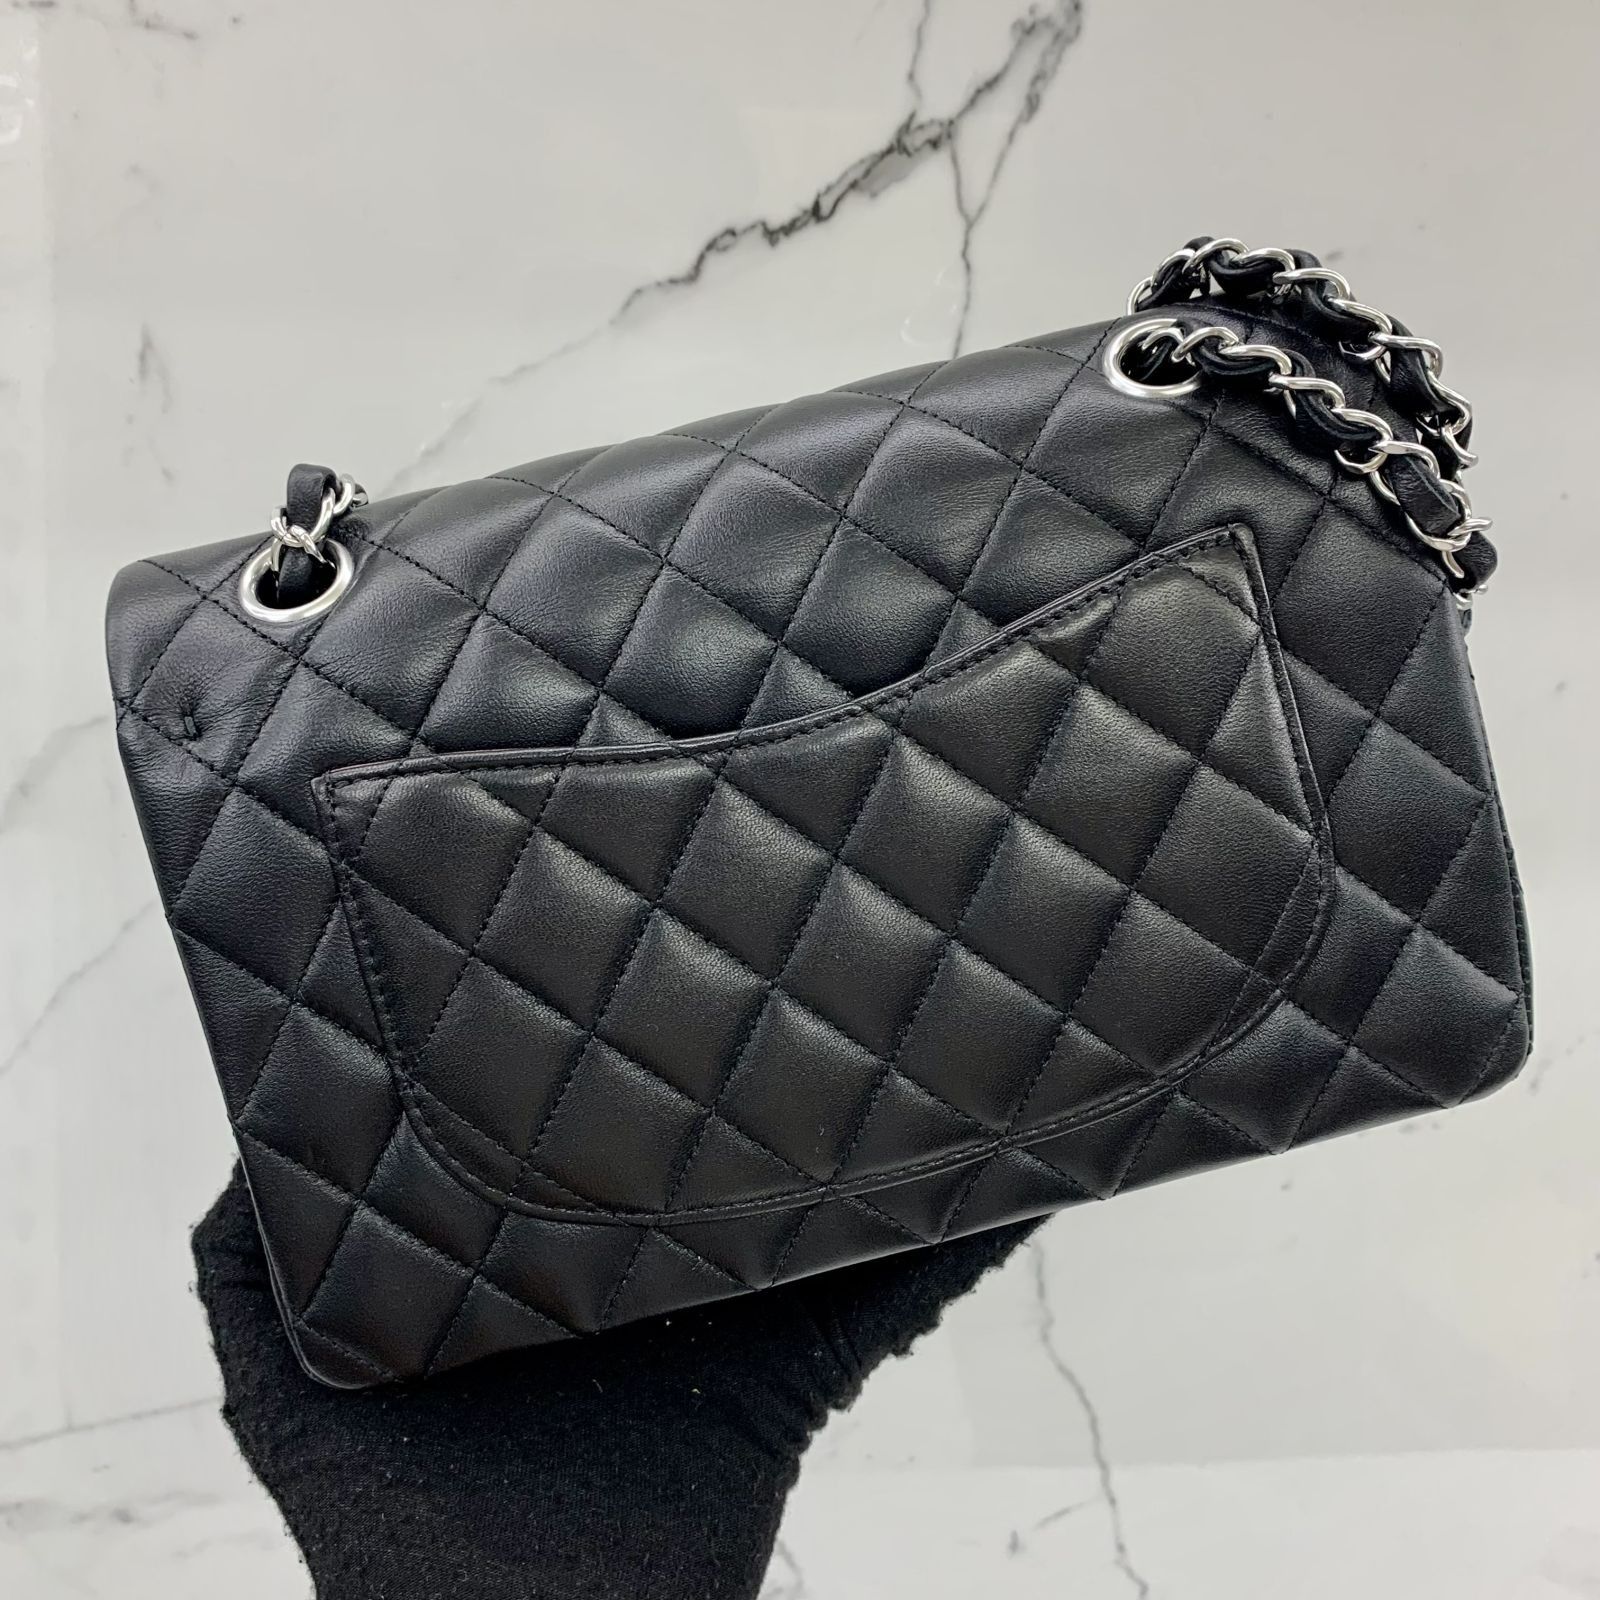 Chanel Bag 1995 - 22 For Sale on 1stDibs  chanel 1995 heart bag, chanel  heart bag 1995, chanel 1995 classic flap